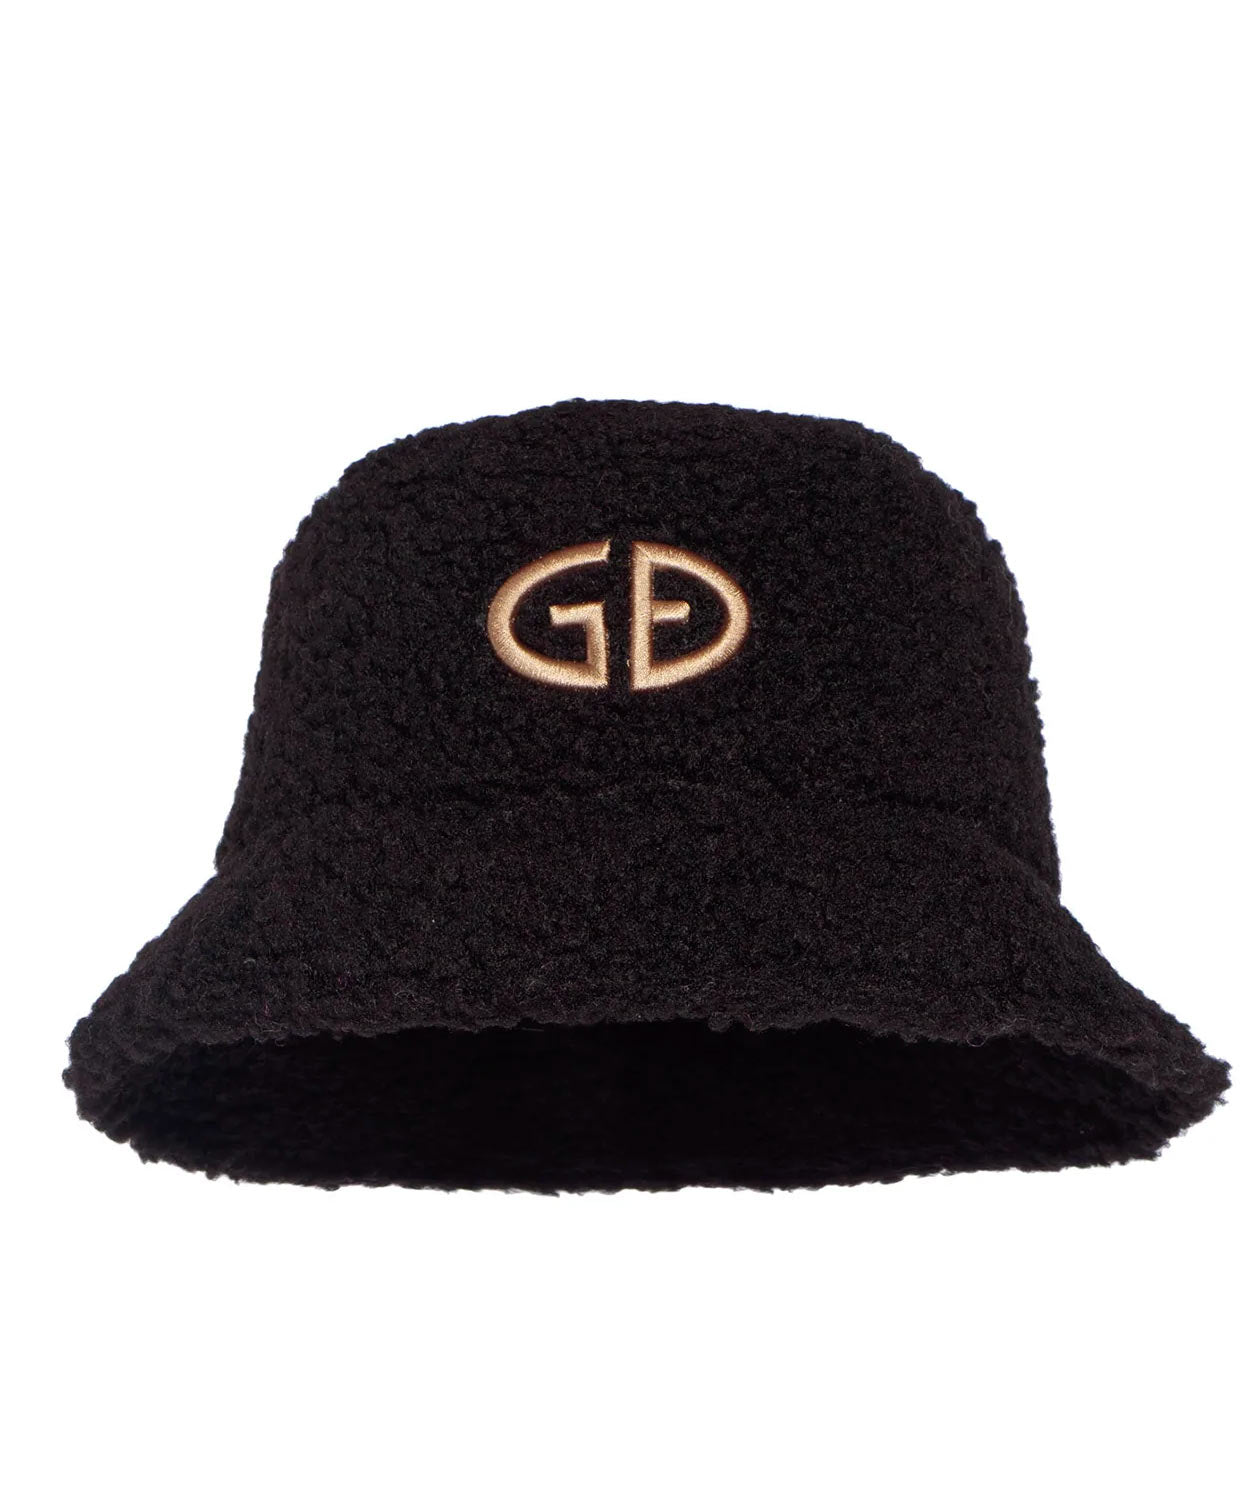 Teds Bucket Hat Hats | Beanies Goldbergh Black OS 